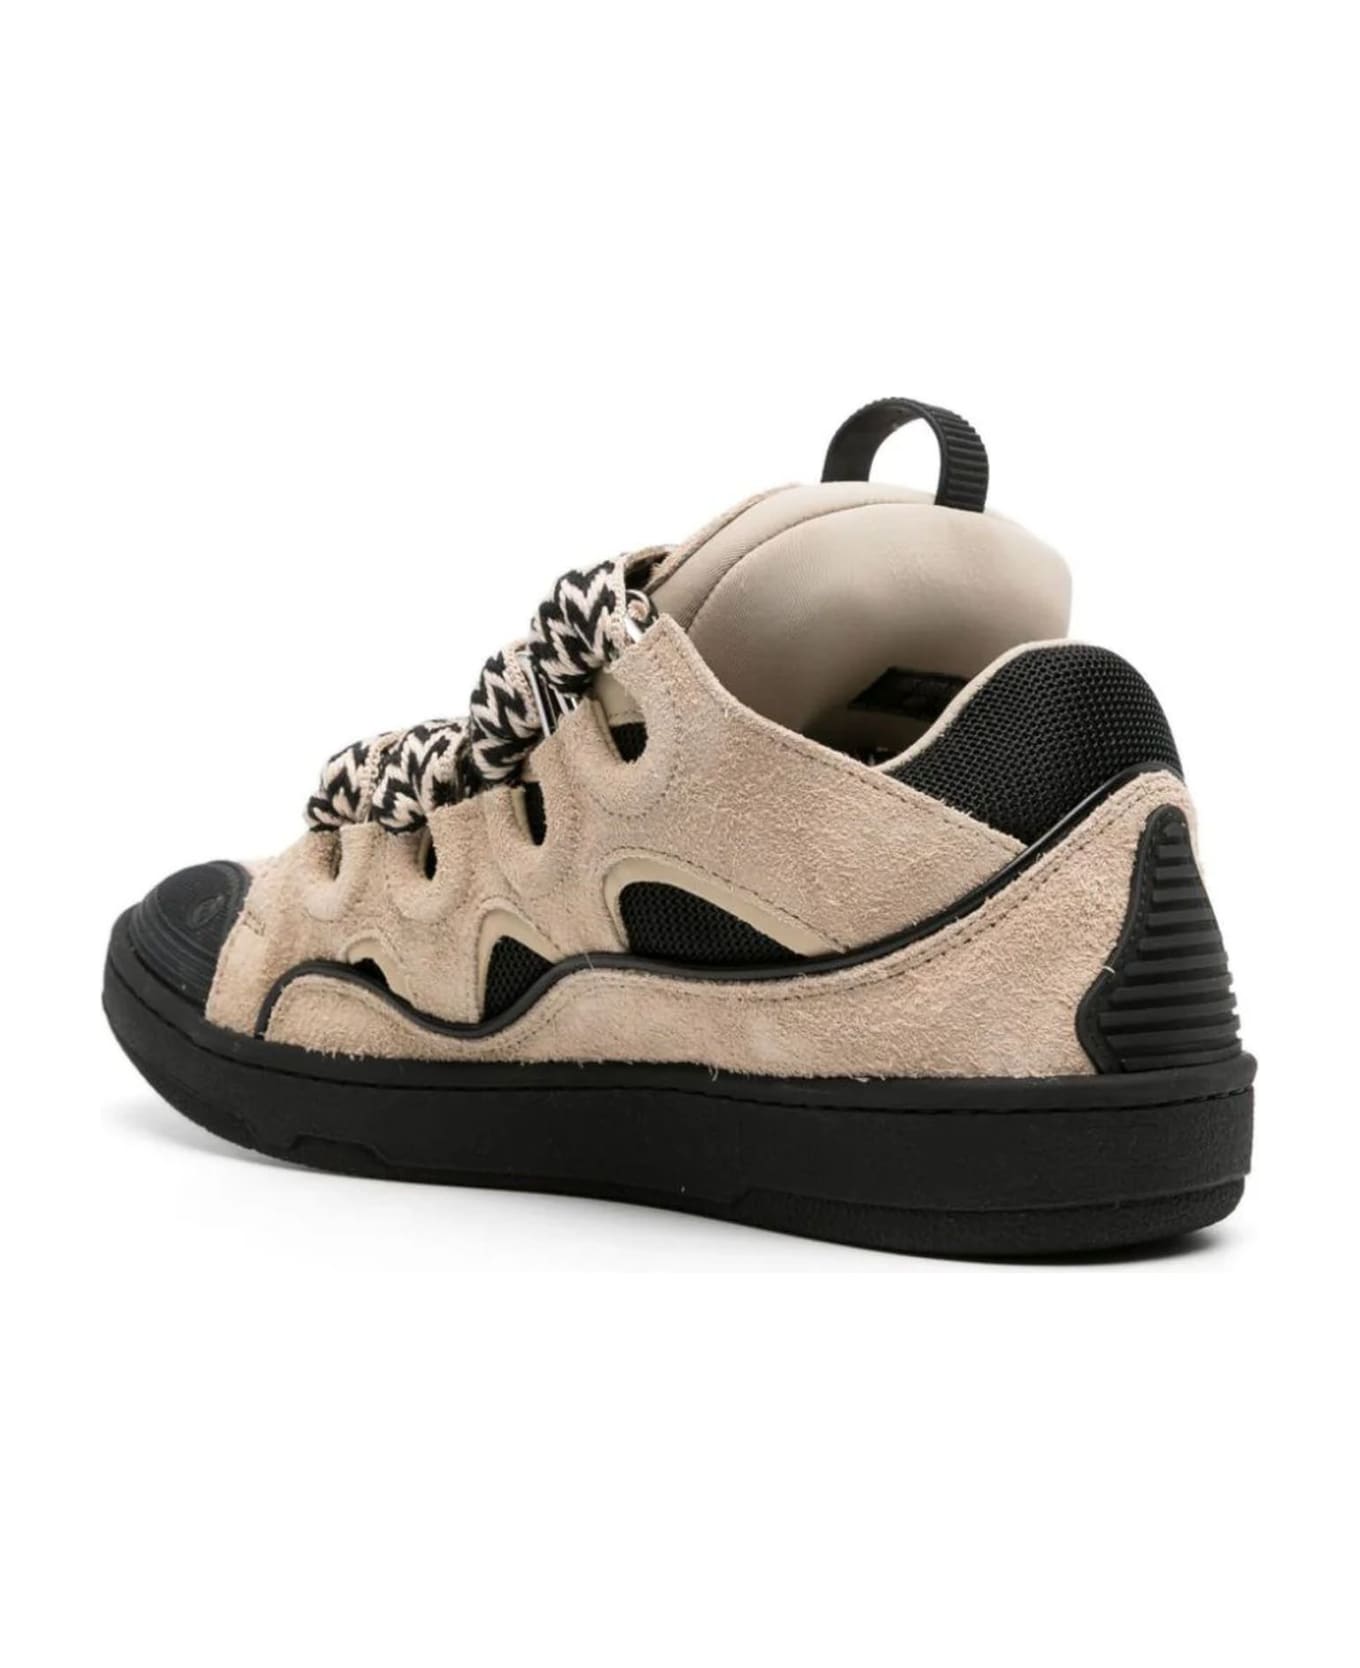 Lanvin Beige And Black Curb Sneakers - Beige